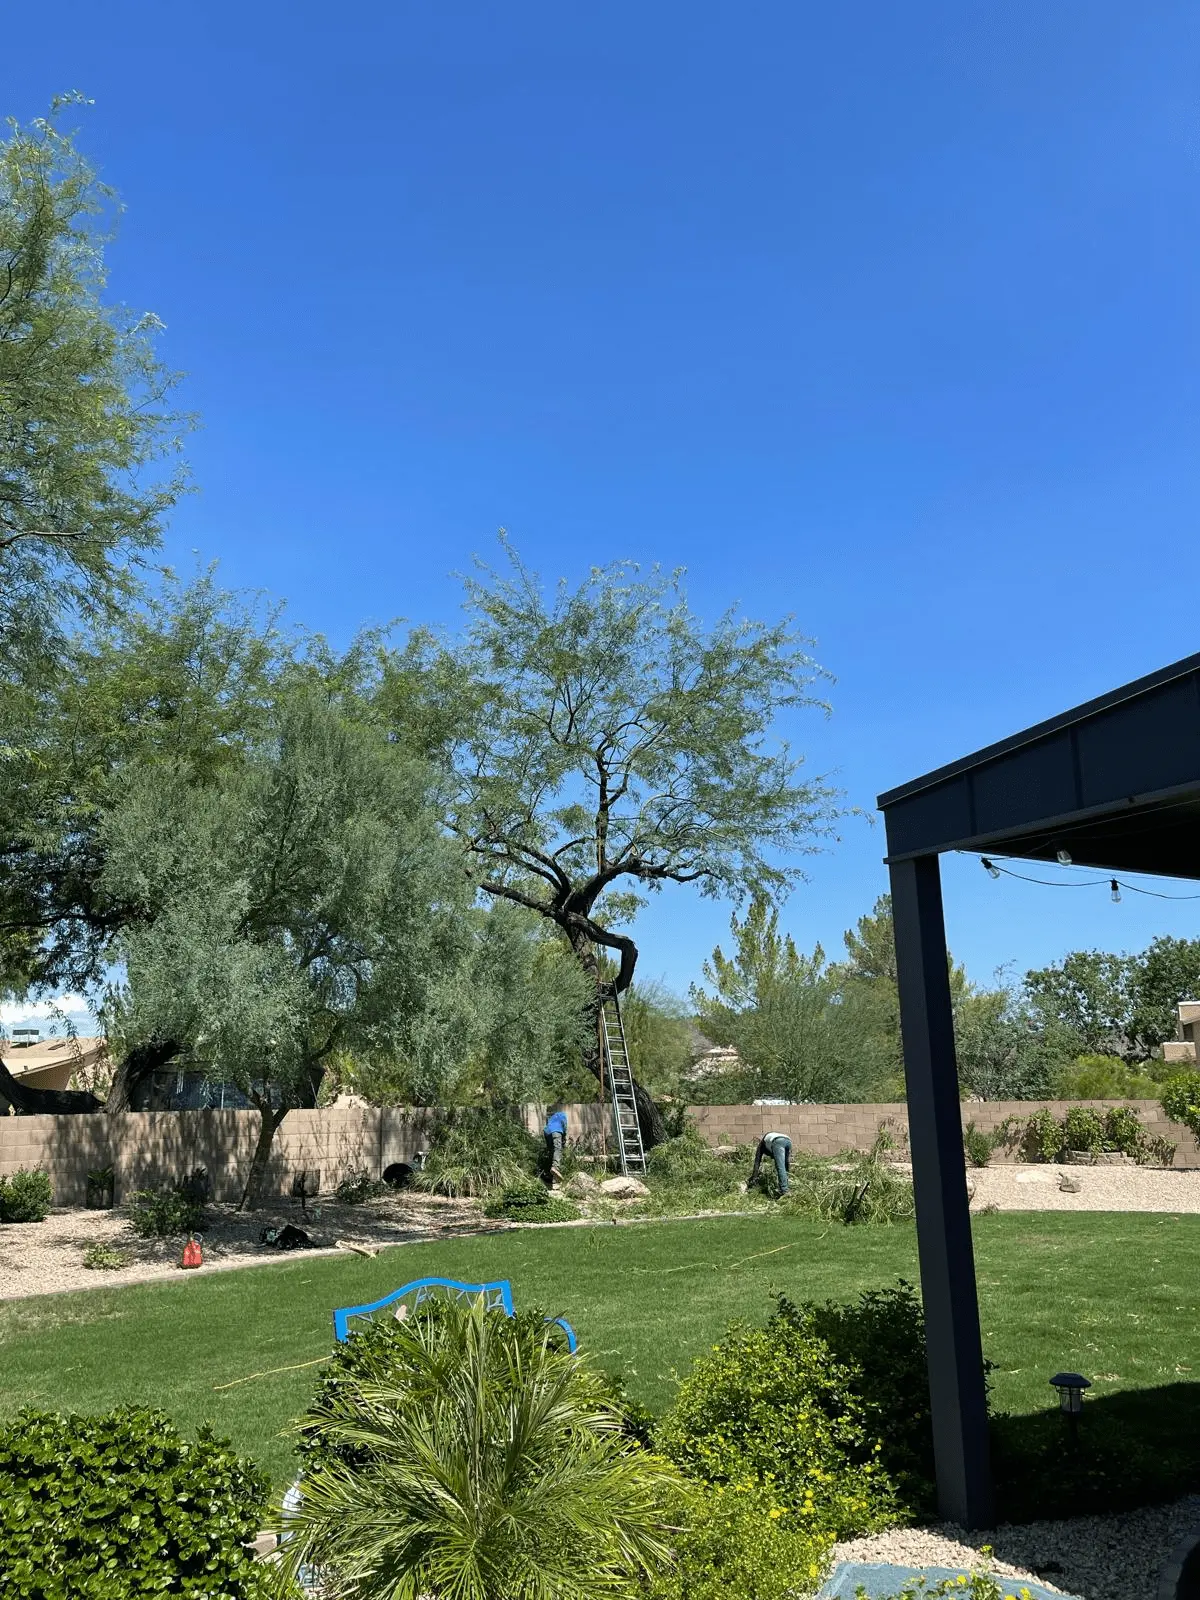 Professional Tree Maintenance Services in Phoenix, AZ!